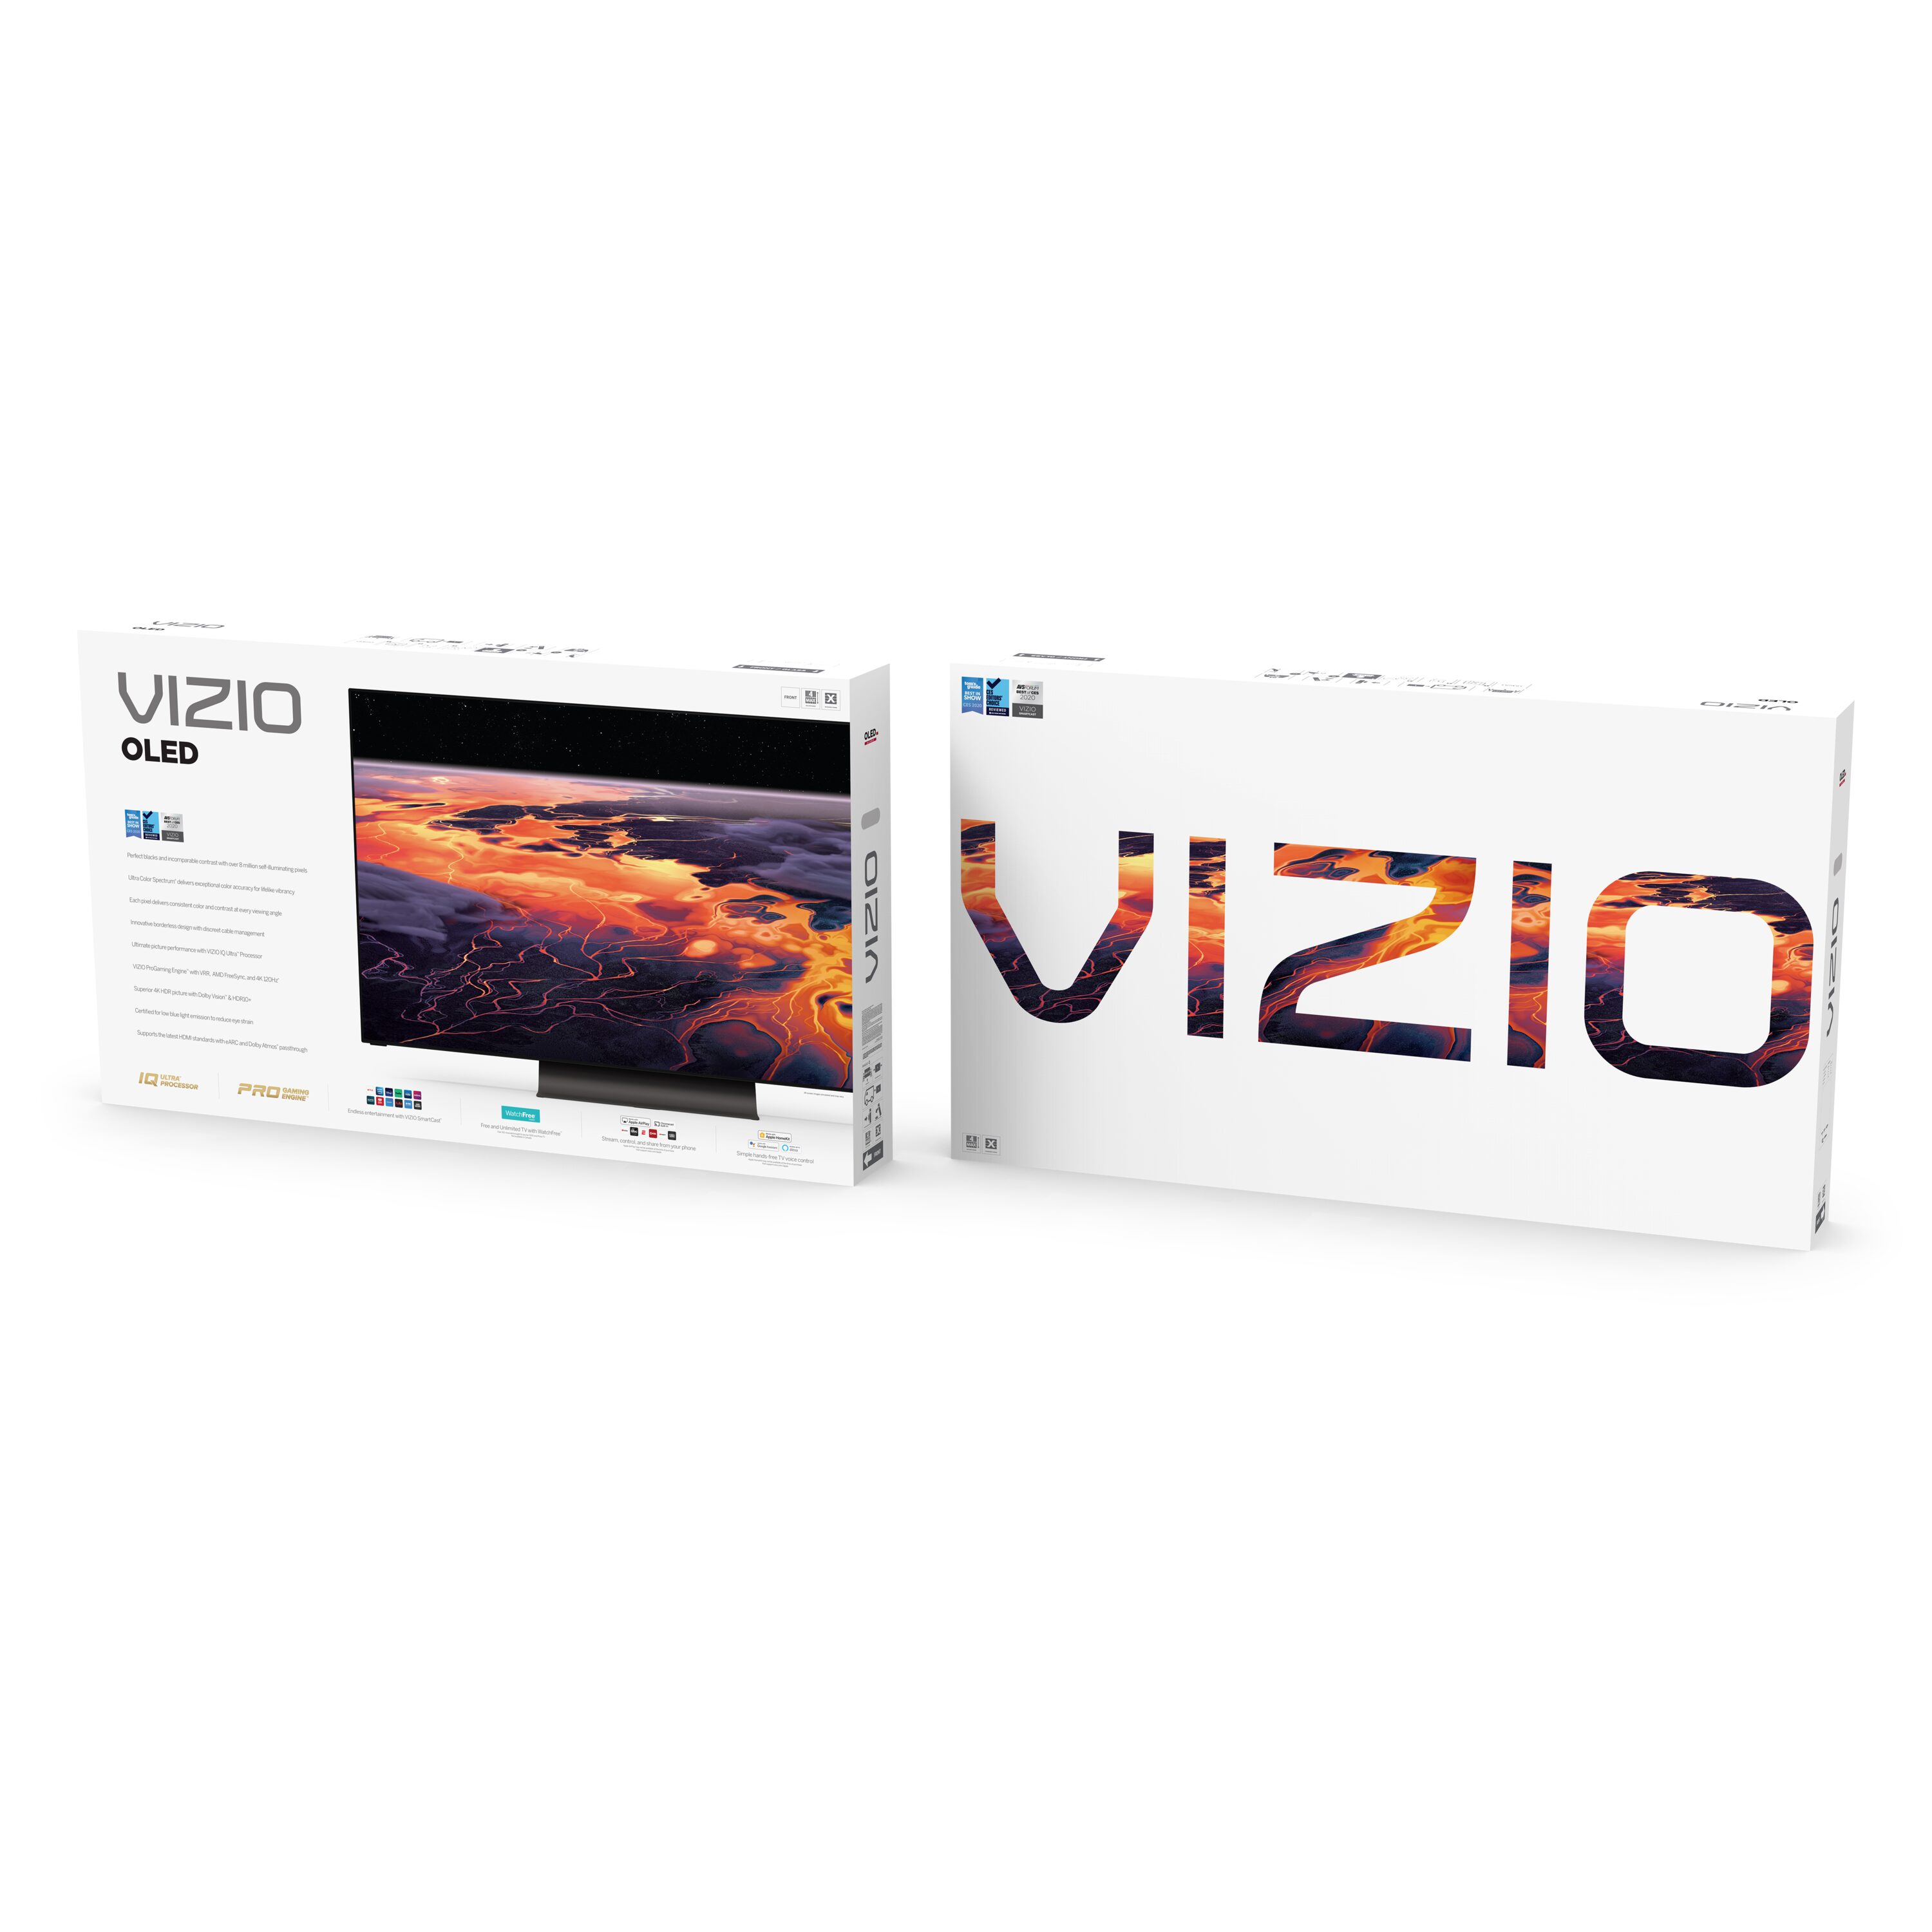 VIZIO OLED 55" Class 4K HDR SmartCast Smart TV OLED55-H1 - image 22 of 23